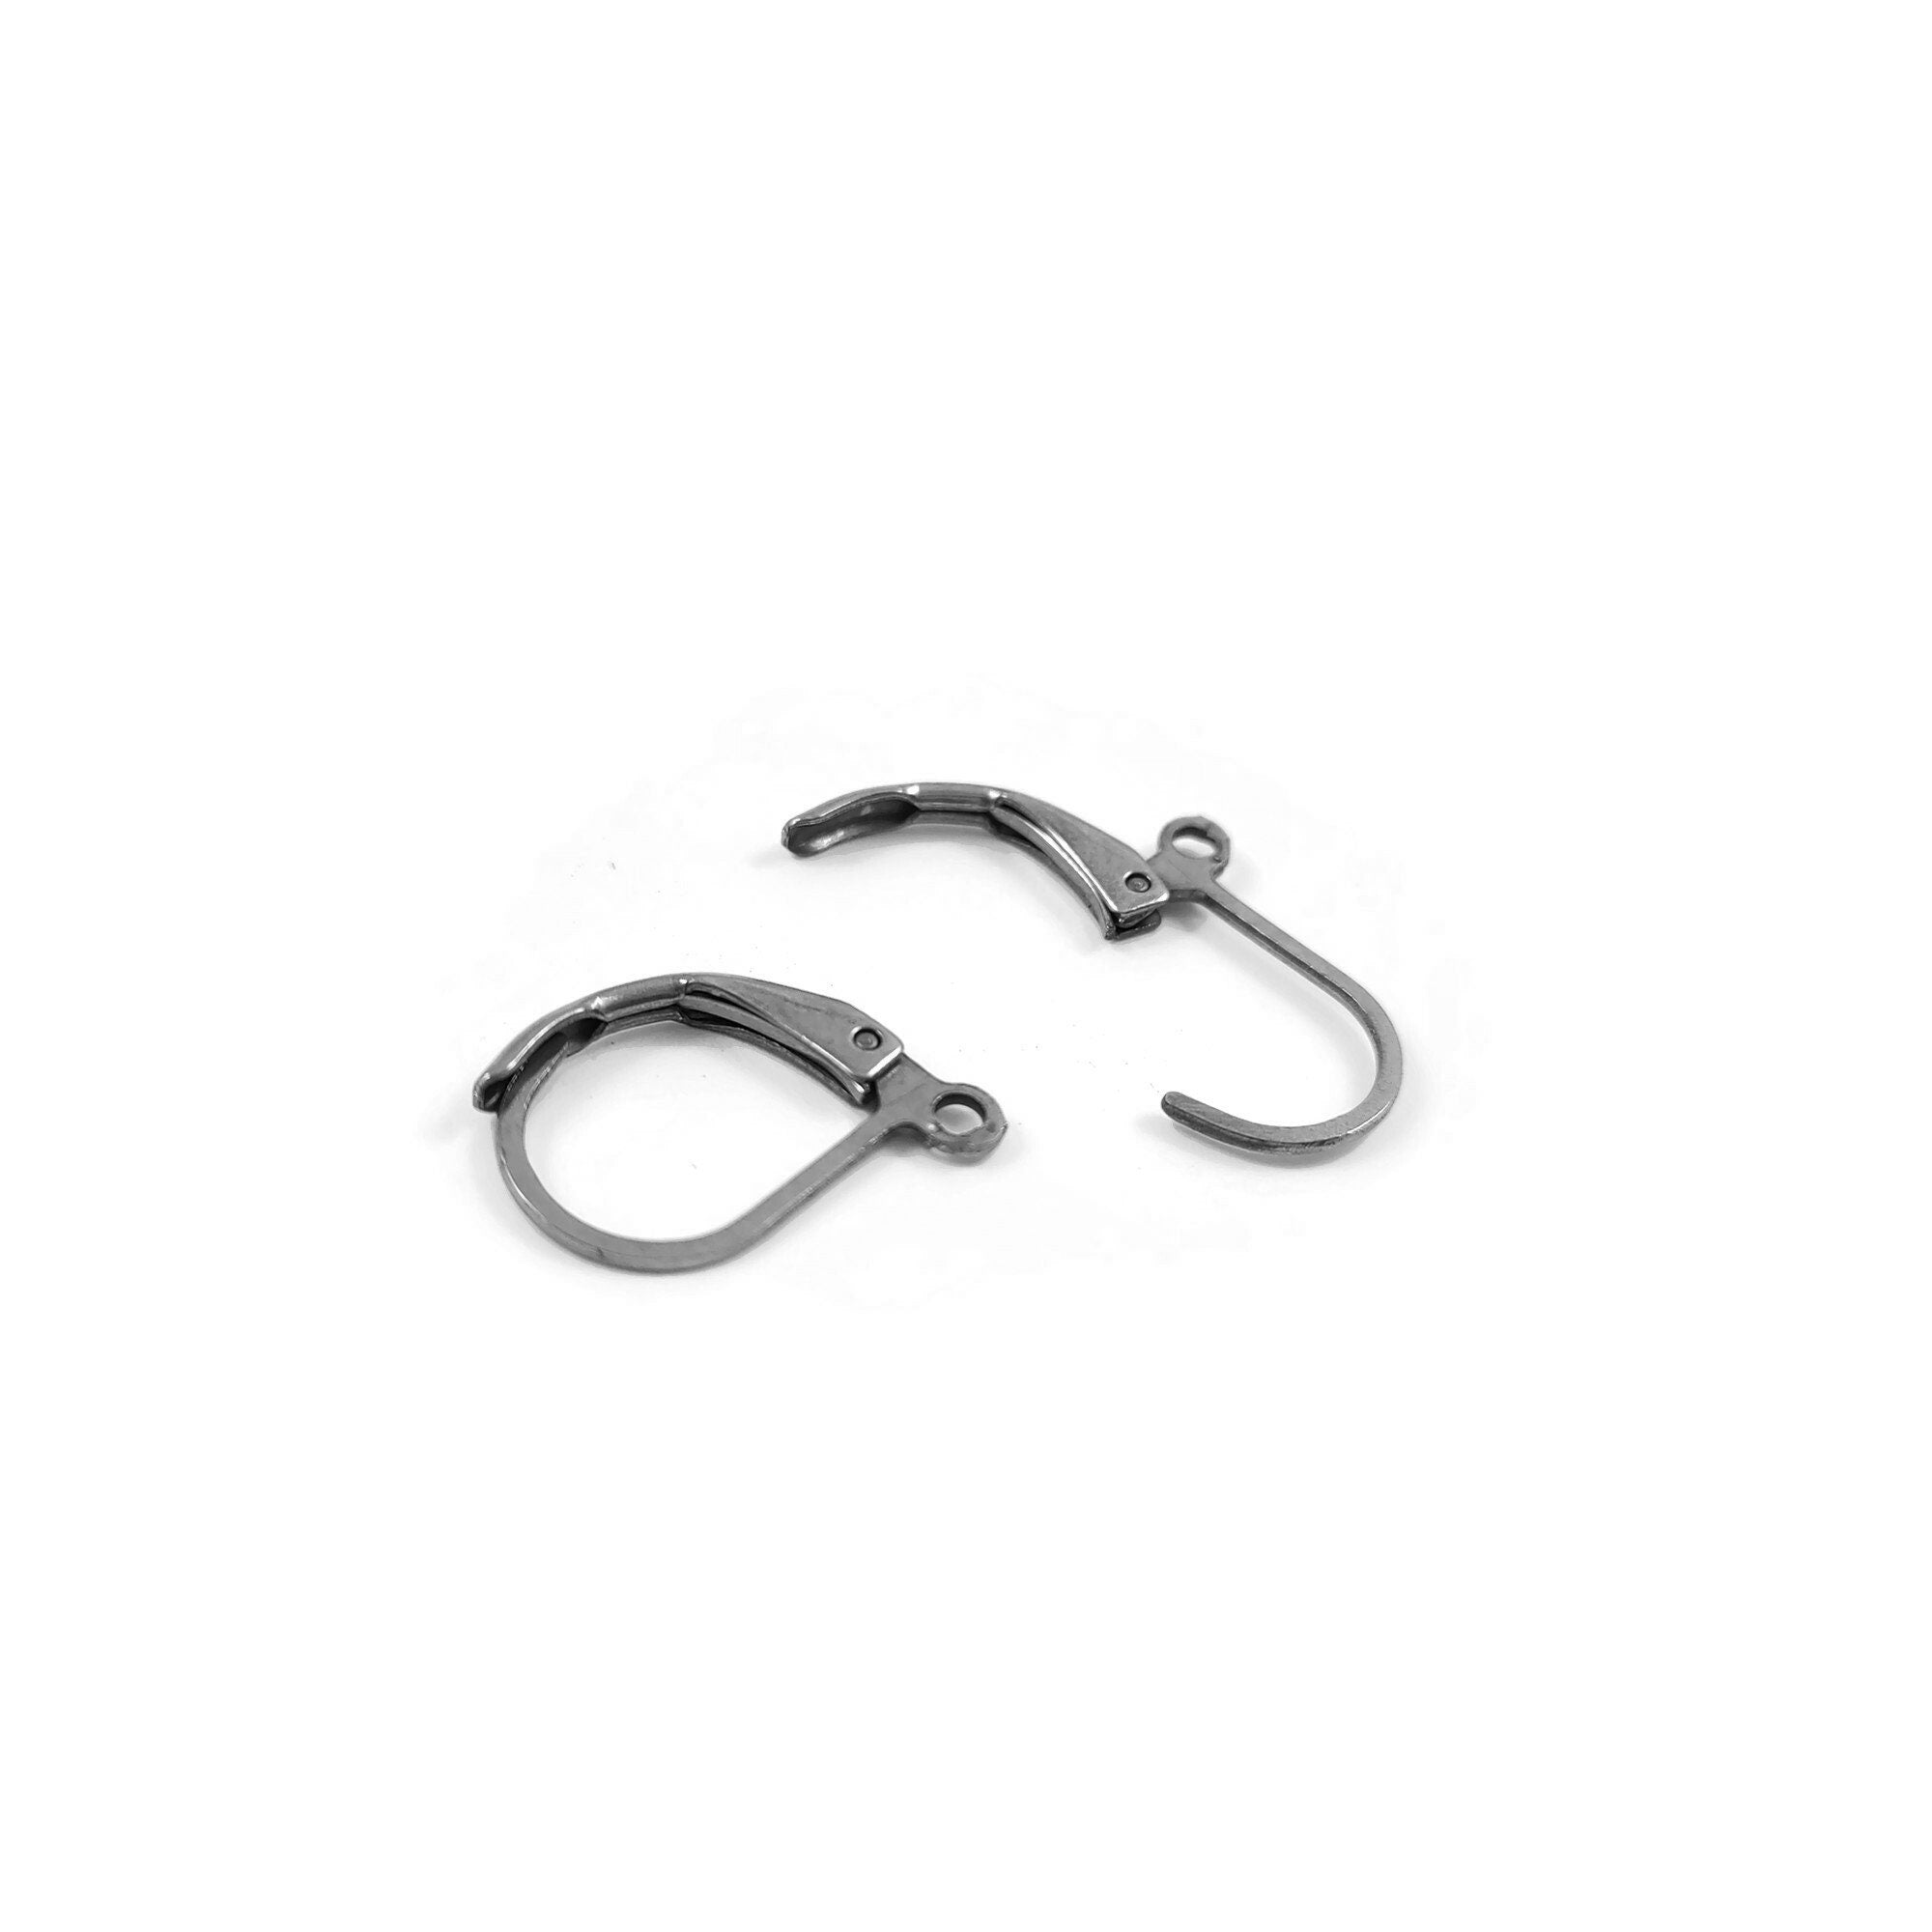 Surgical steel leverback hooks, Hypoallergenic earring making findings